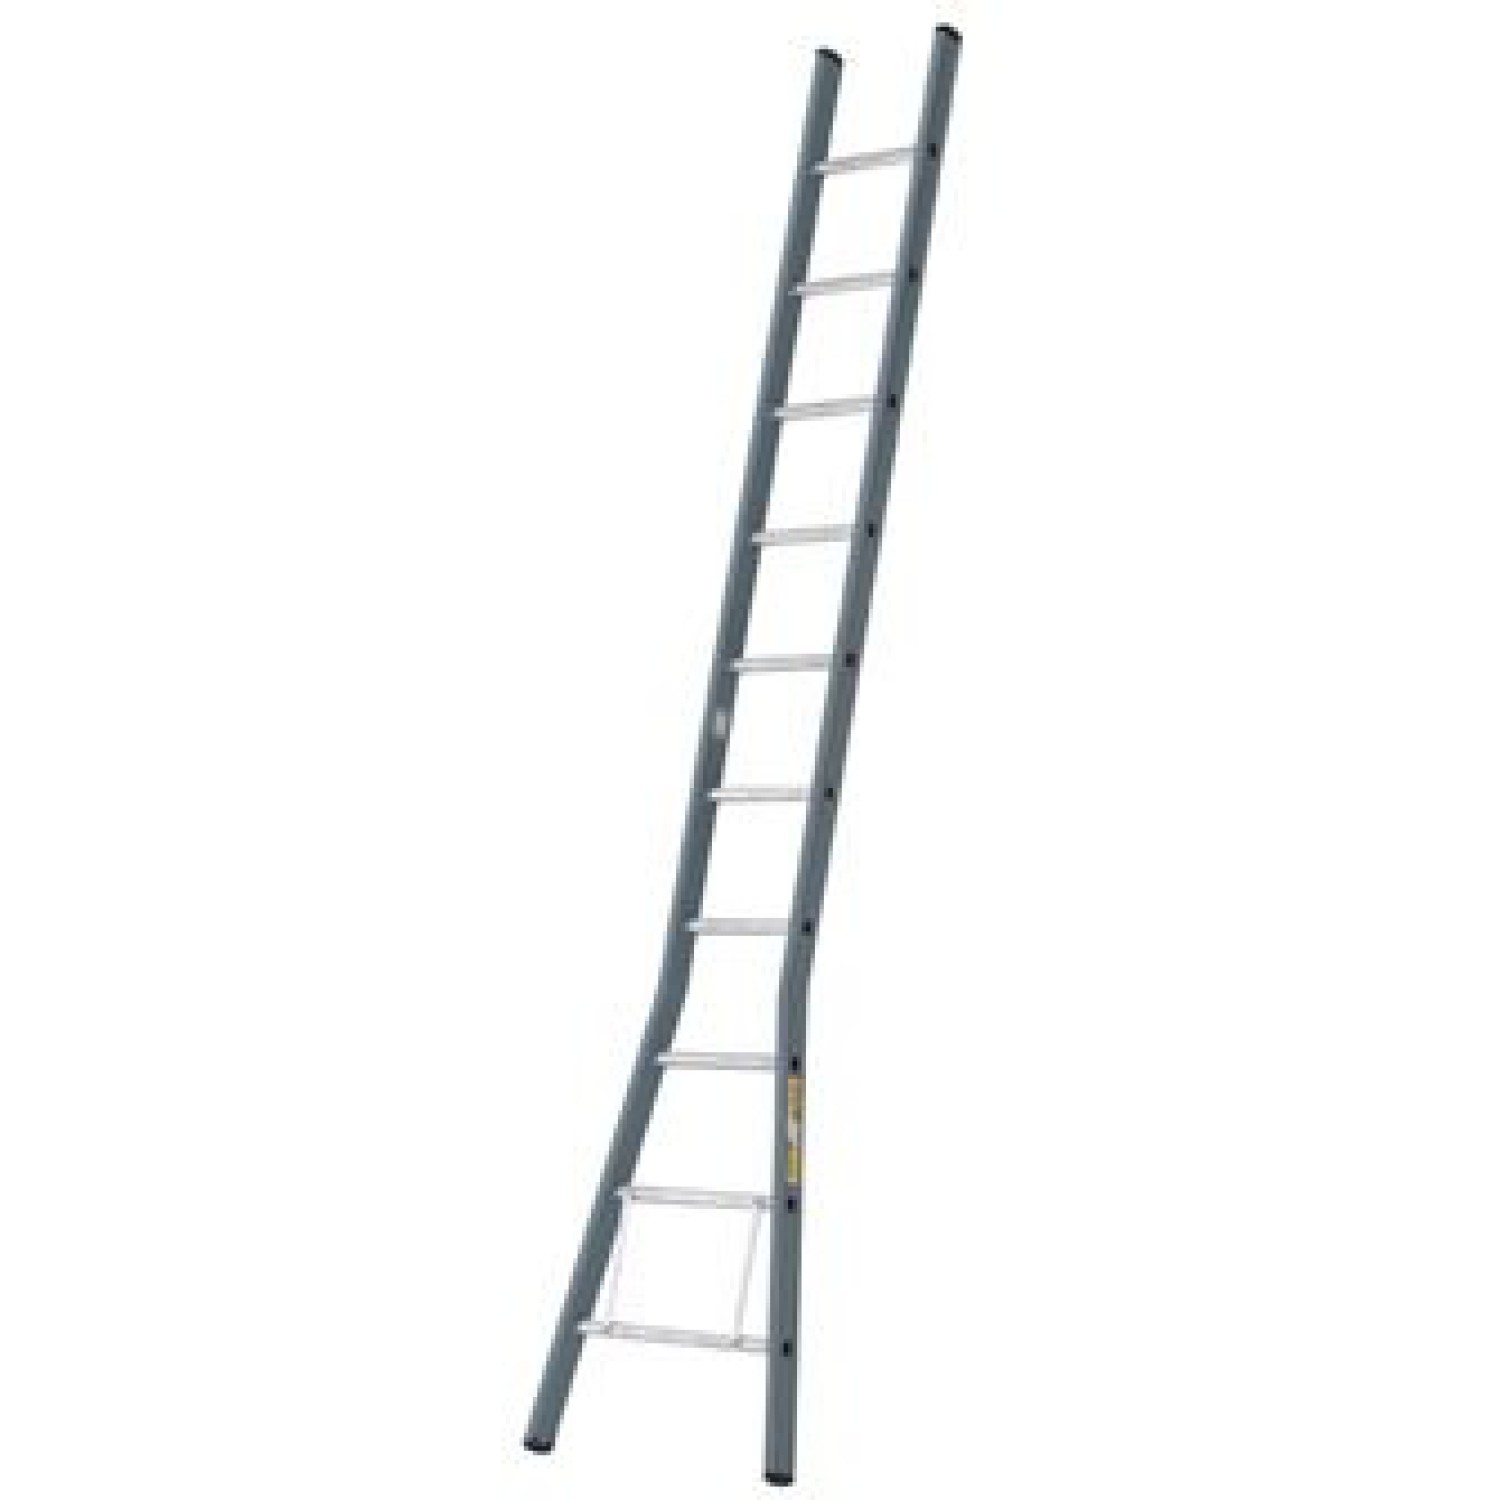 dirks enkele uitgebogen ladder 3 meter